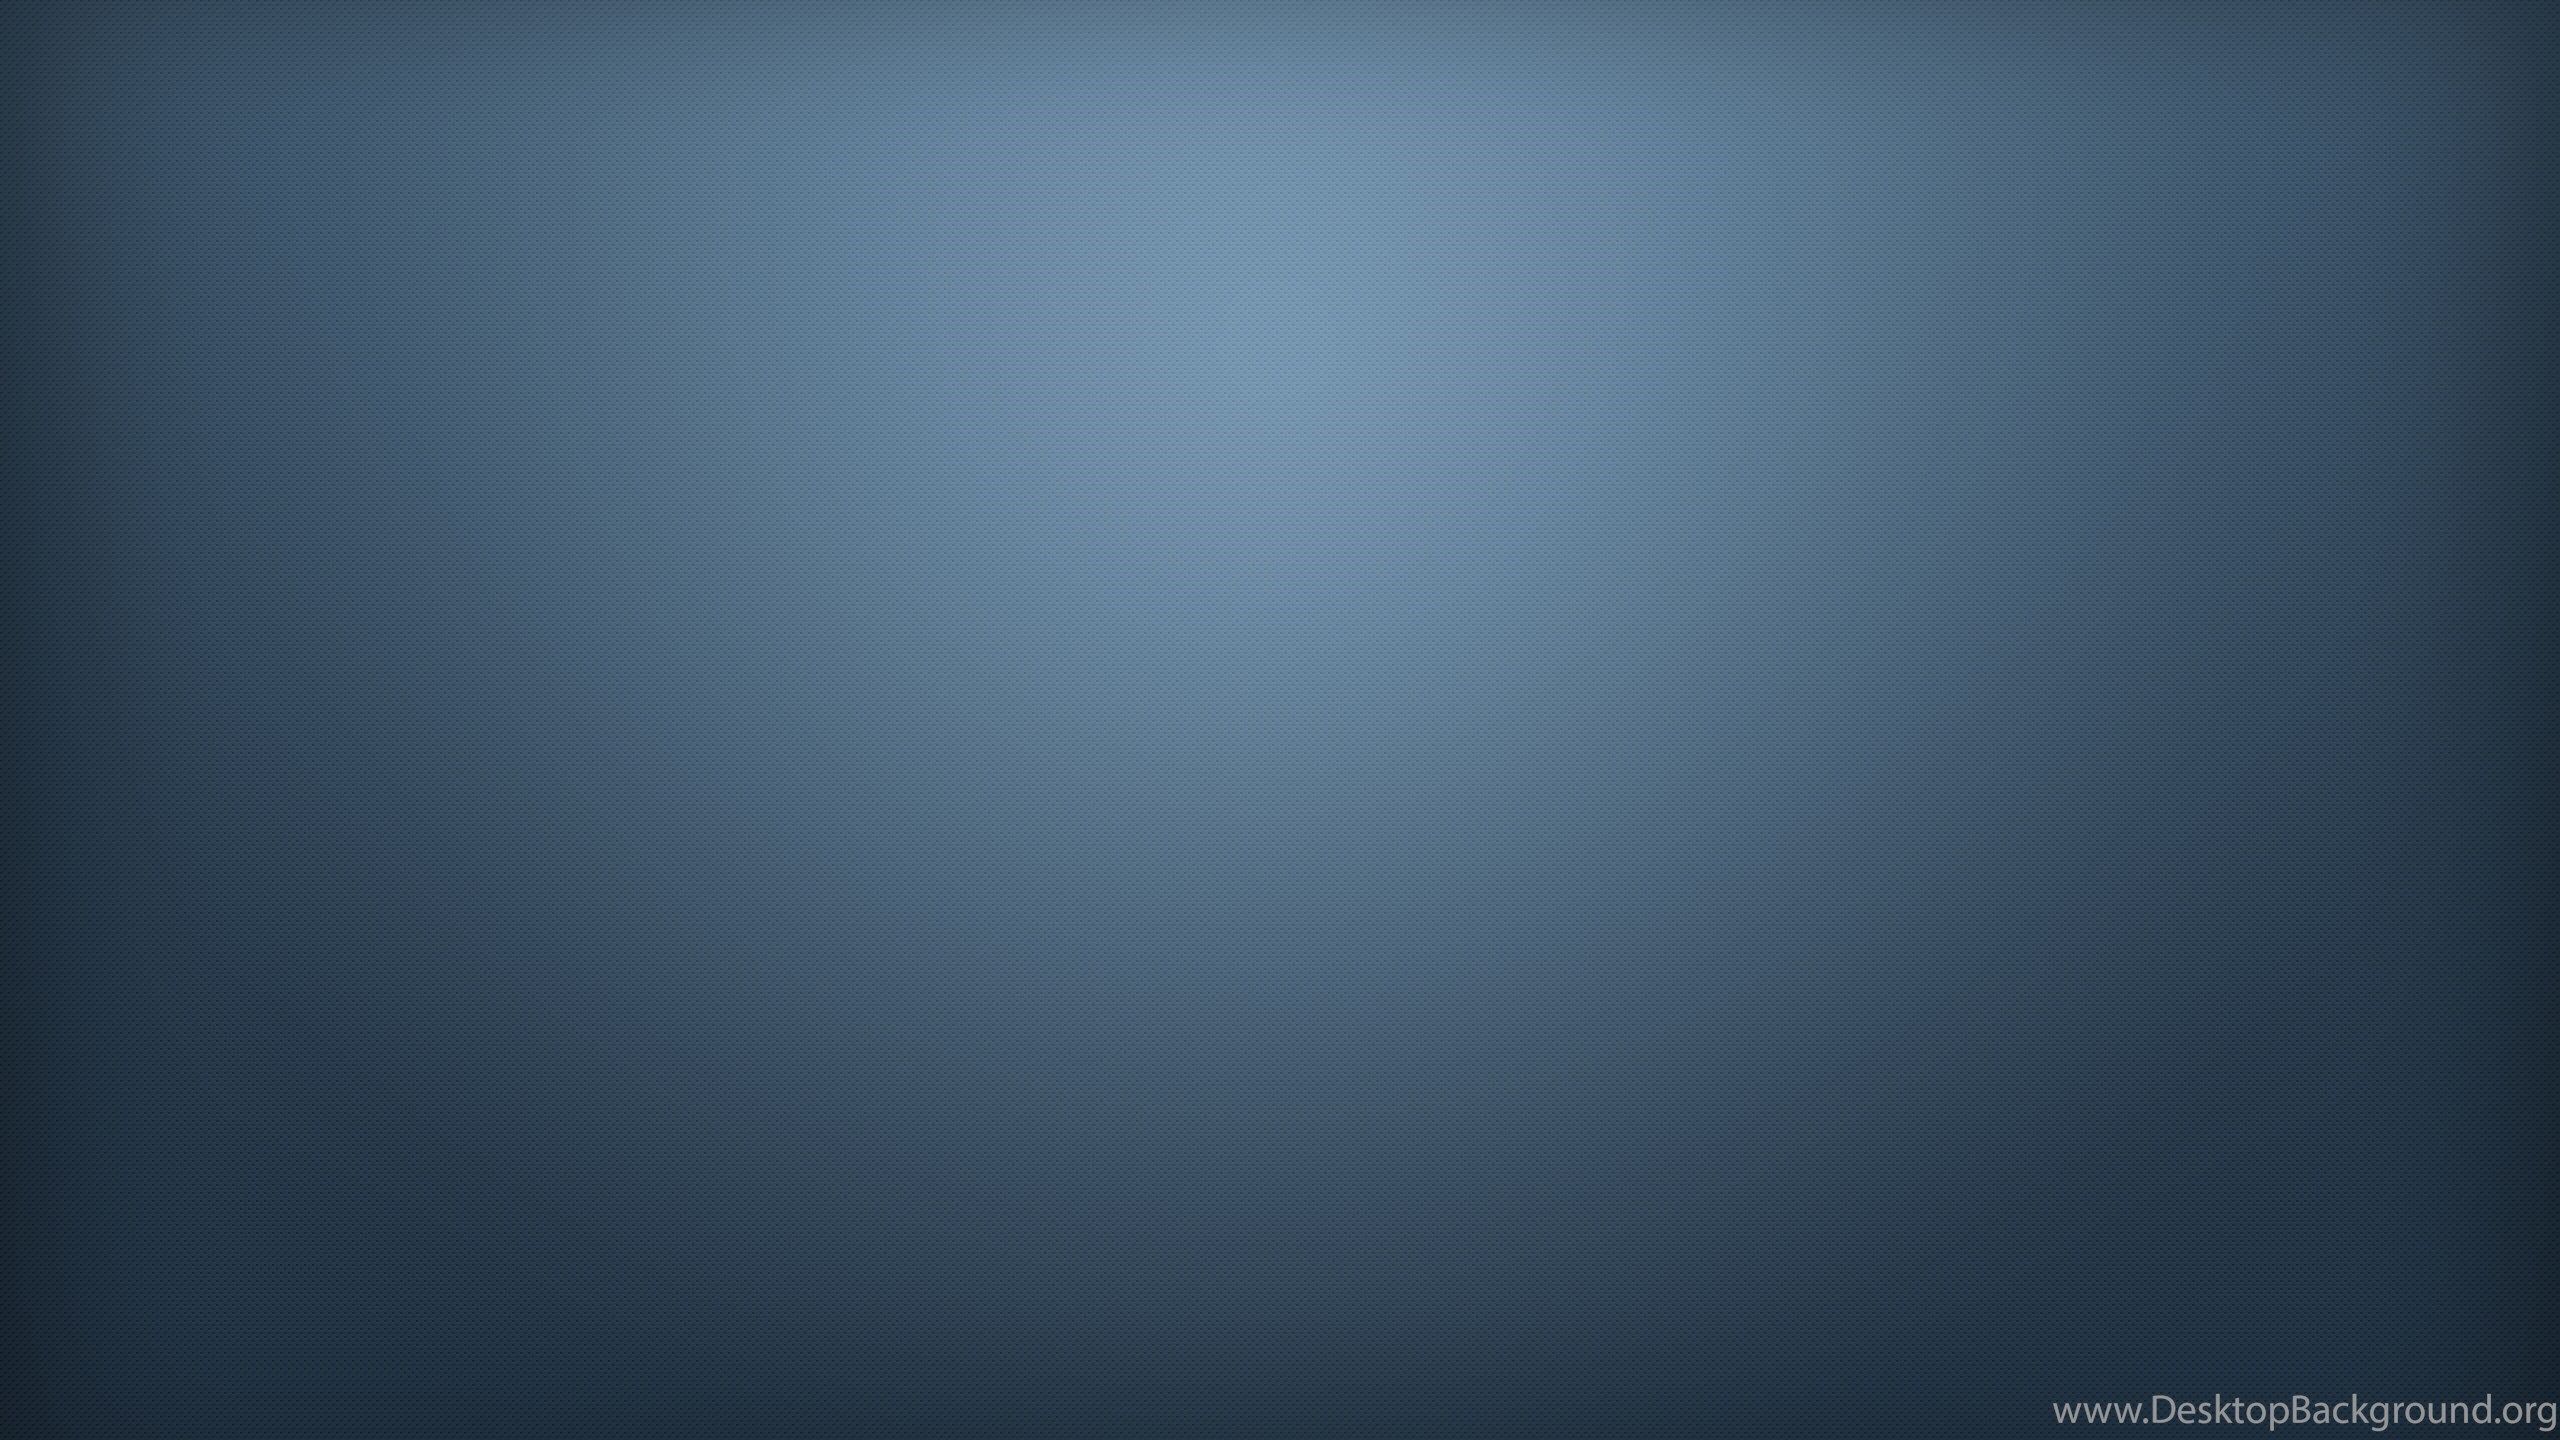 Dark gray blue 3D color backgrou, Wallpaper By Icuk kvertievich. Desktop Background